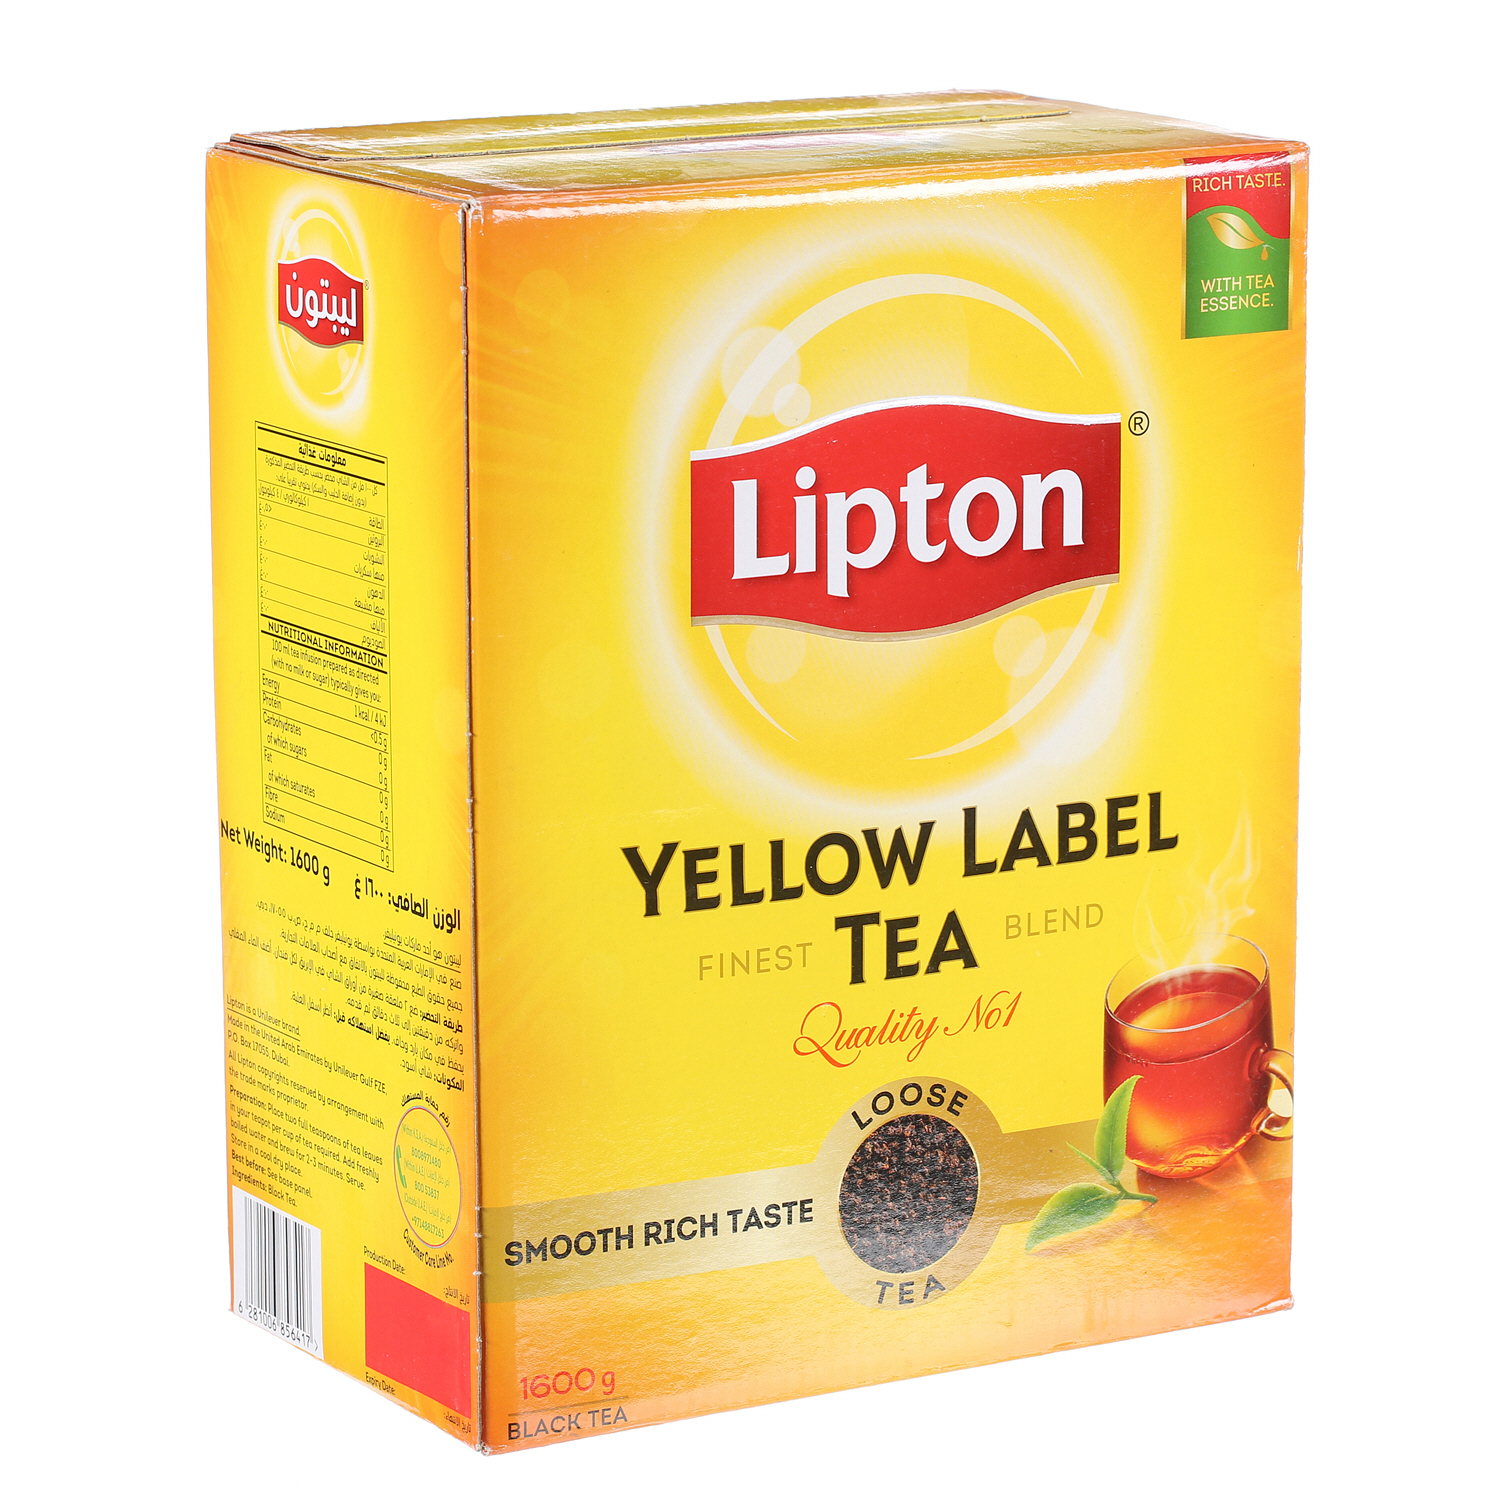 Lipton Yellow Tea Powder 1600 g